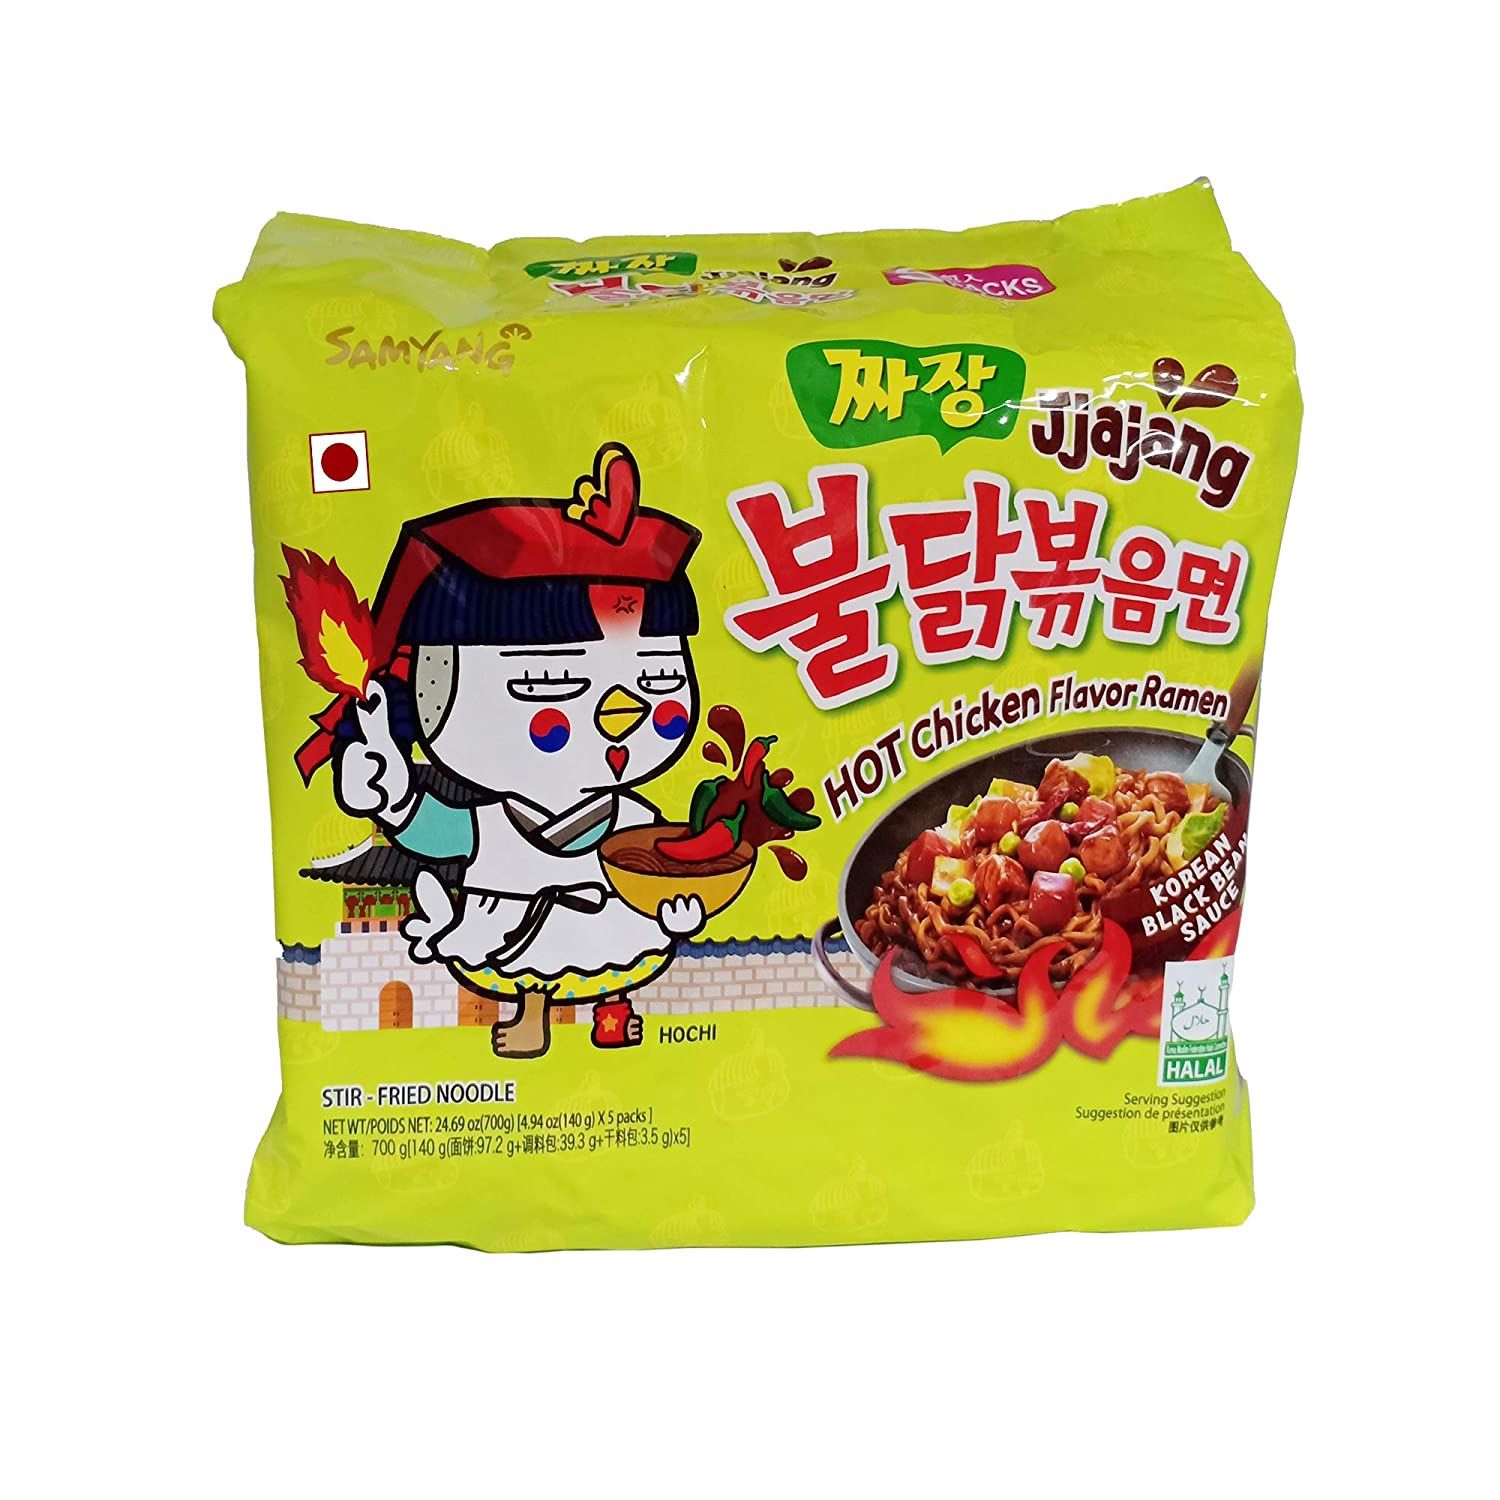 Samyang Hot Chicken Ramen Jjajang Noodles Image